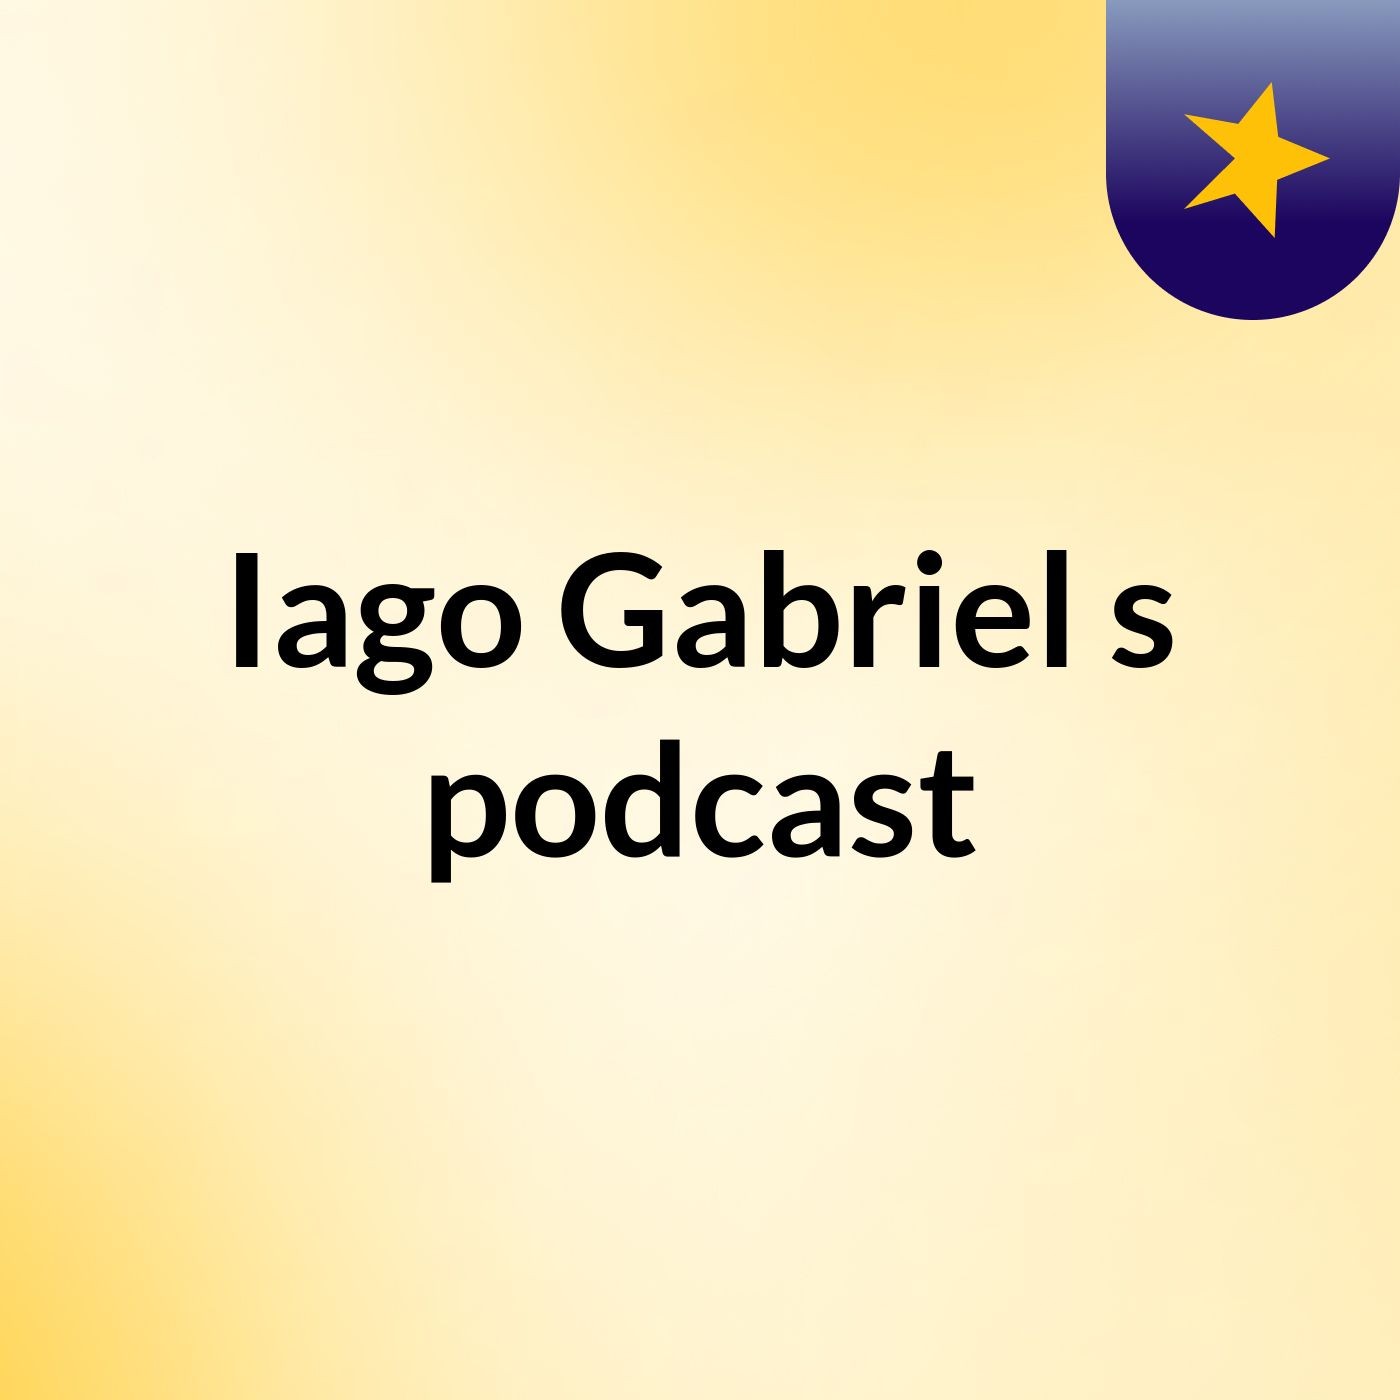 Iago Gabriel's podcast